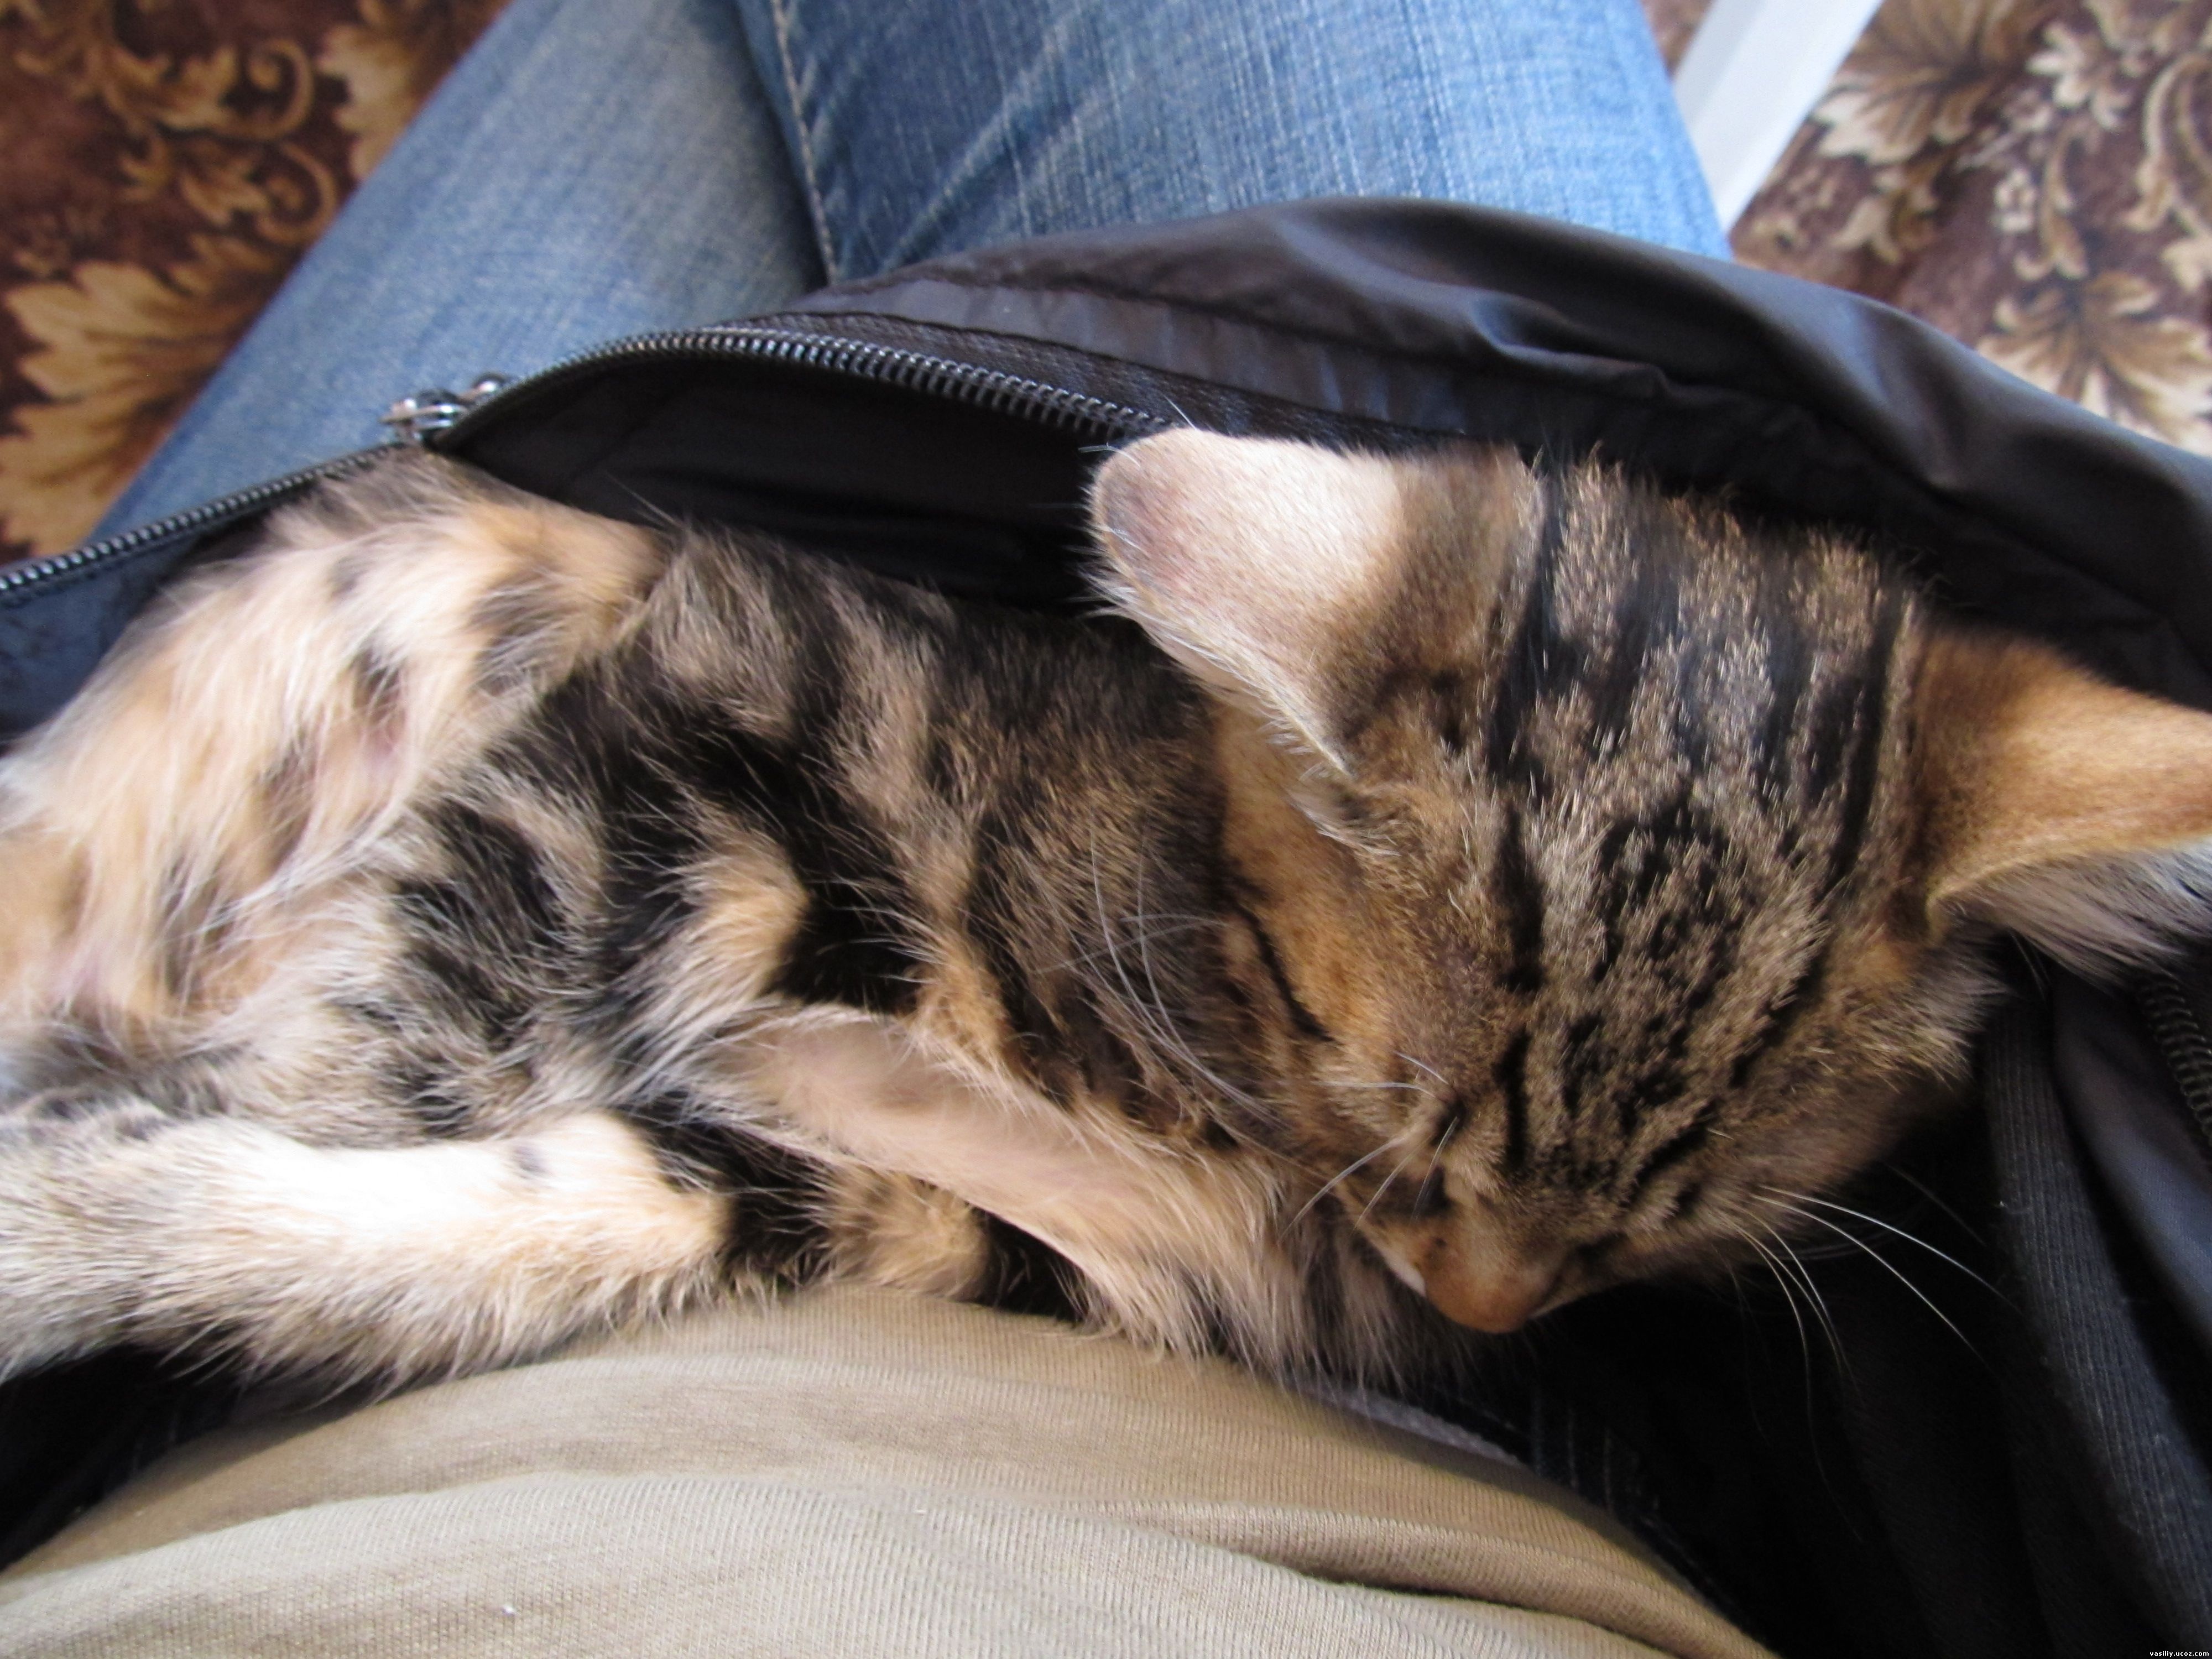 A kitten is sleeping under coat